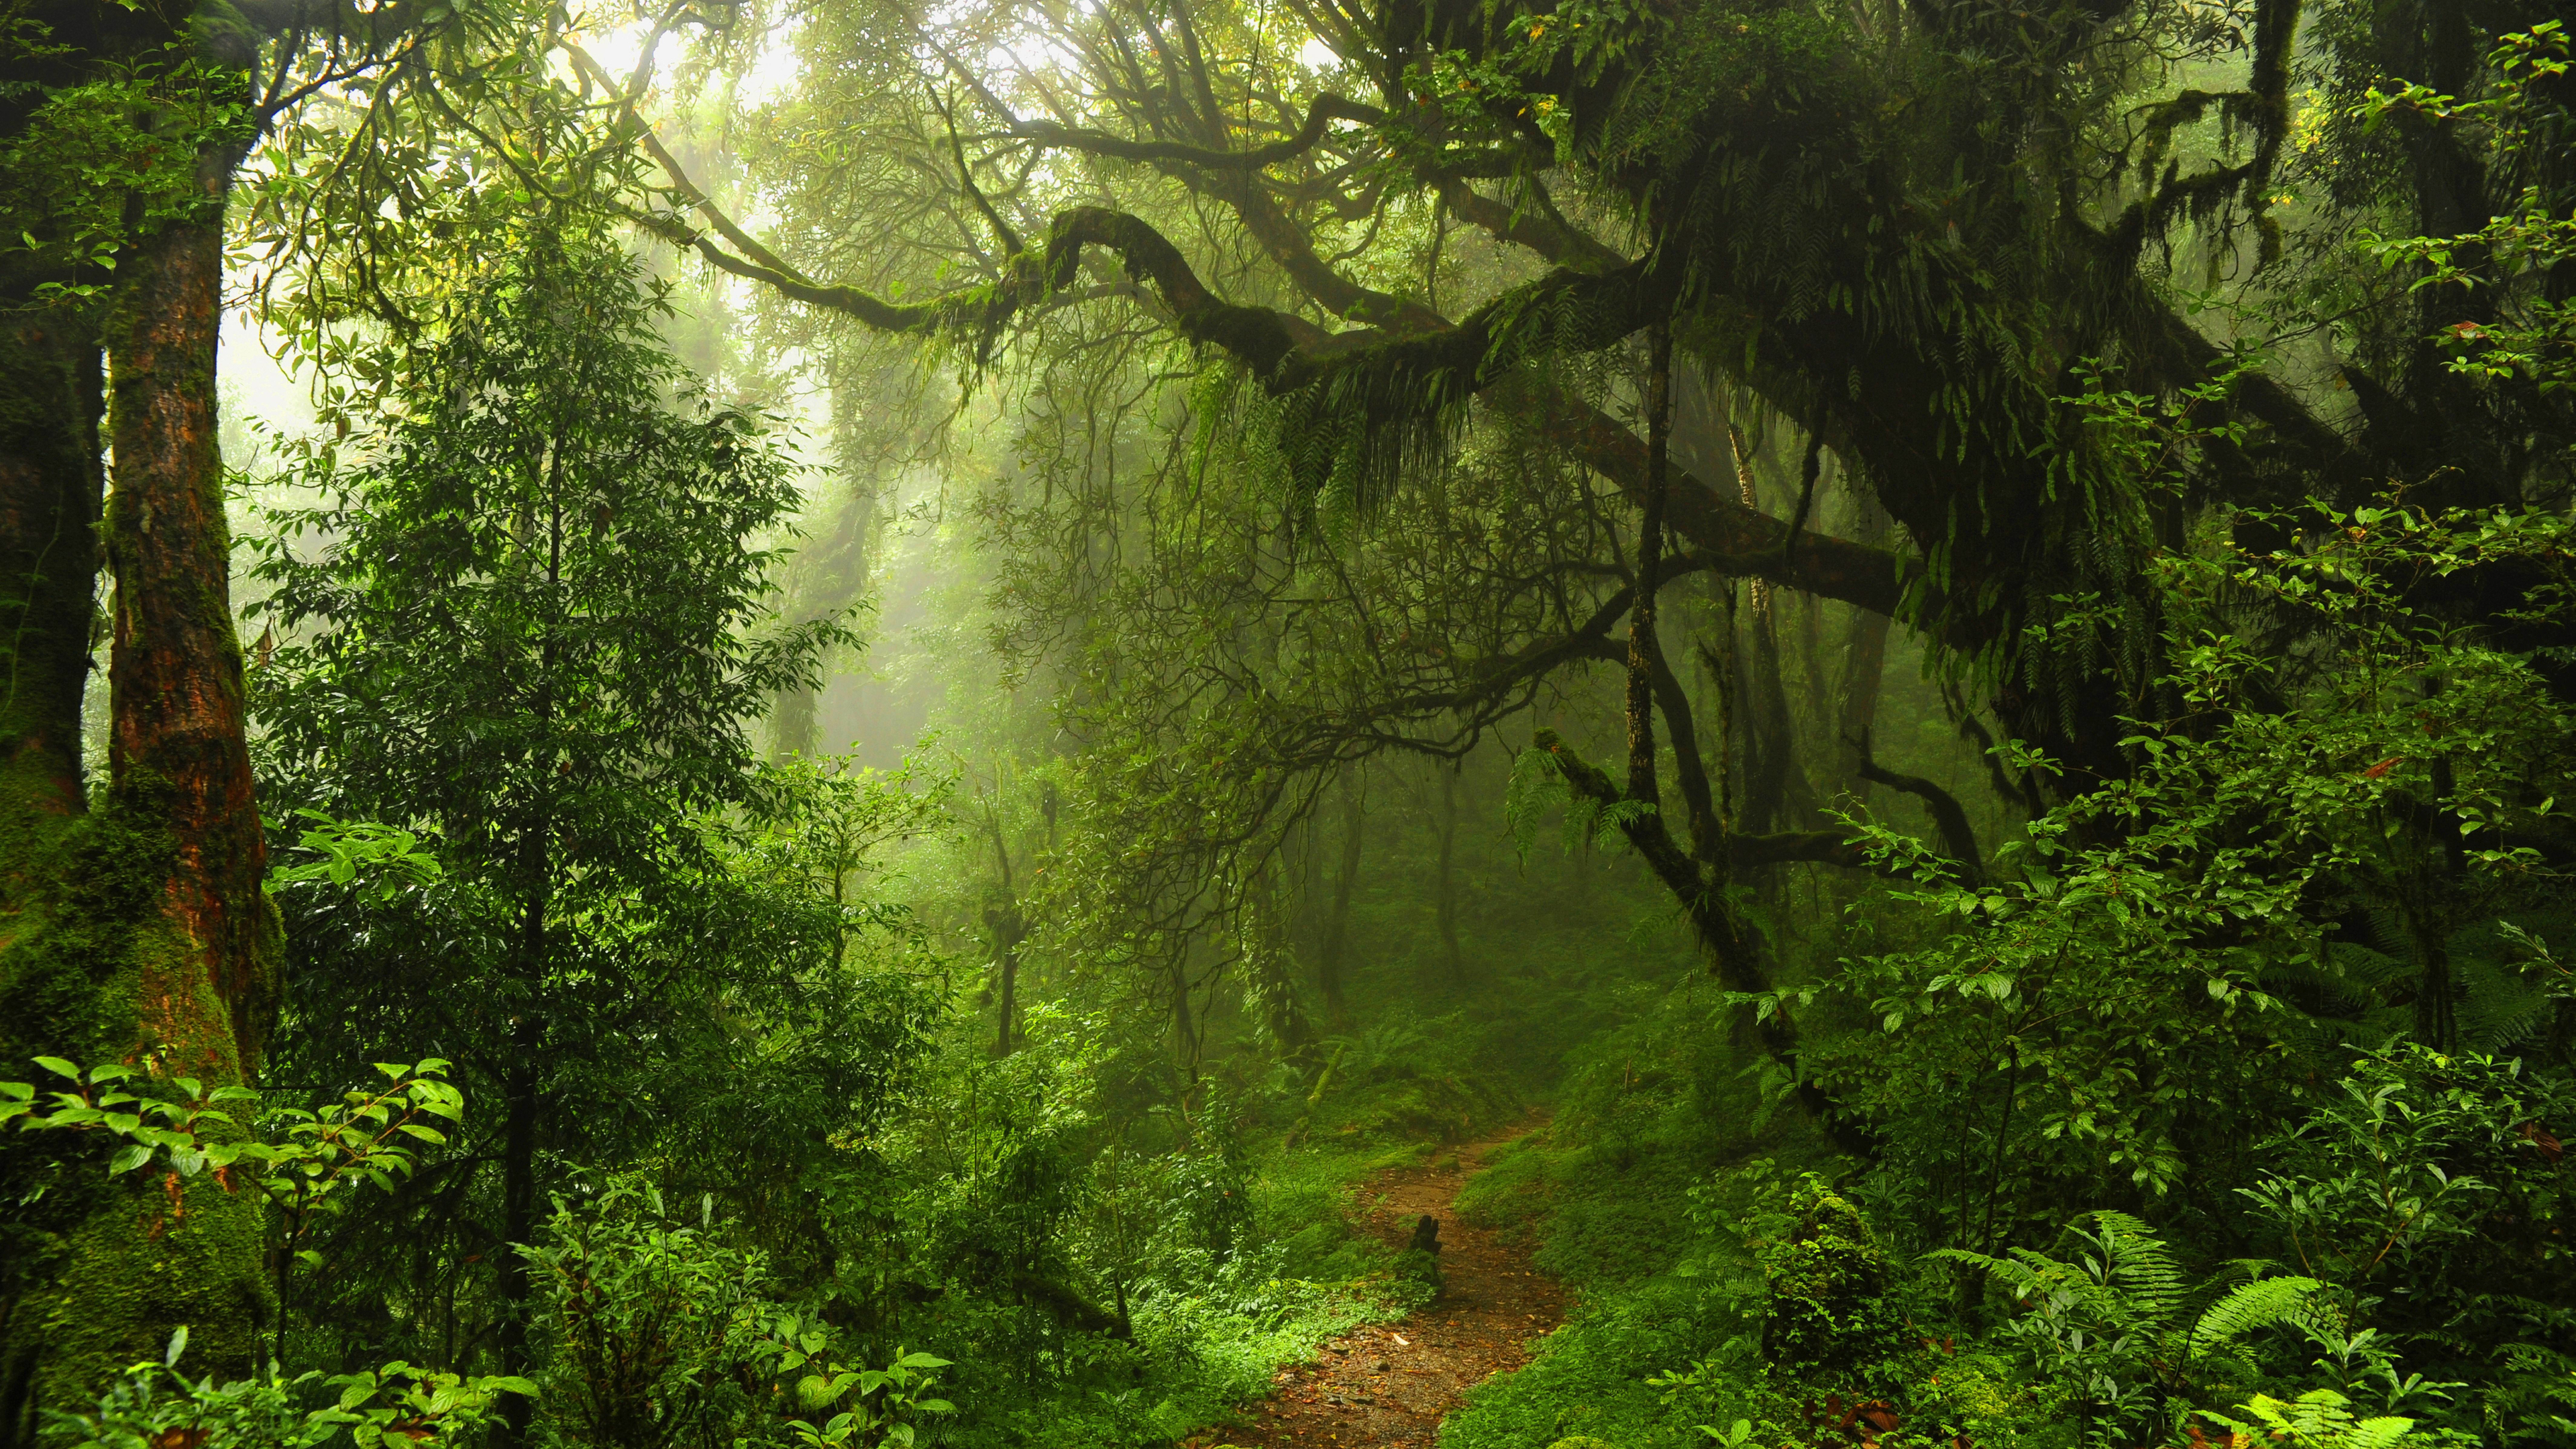 General 3840x2160 forest trees nature mist plants landscape green path